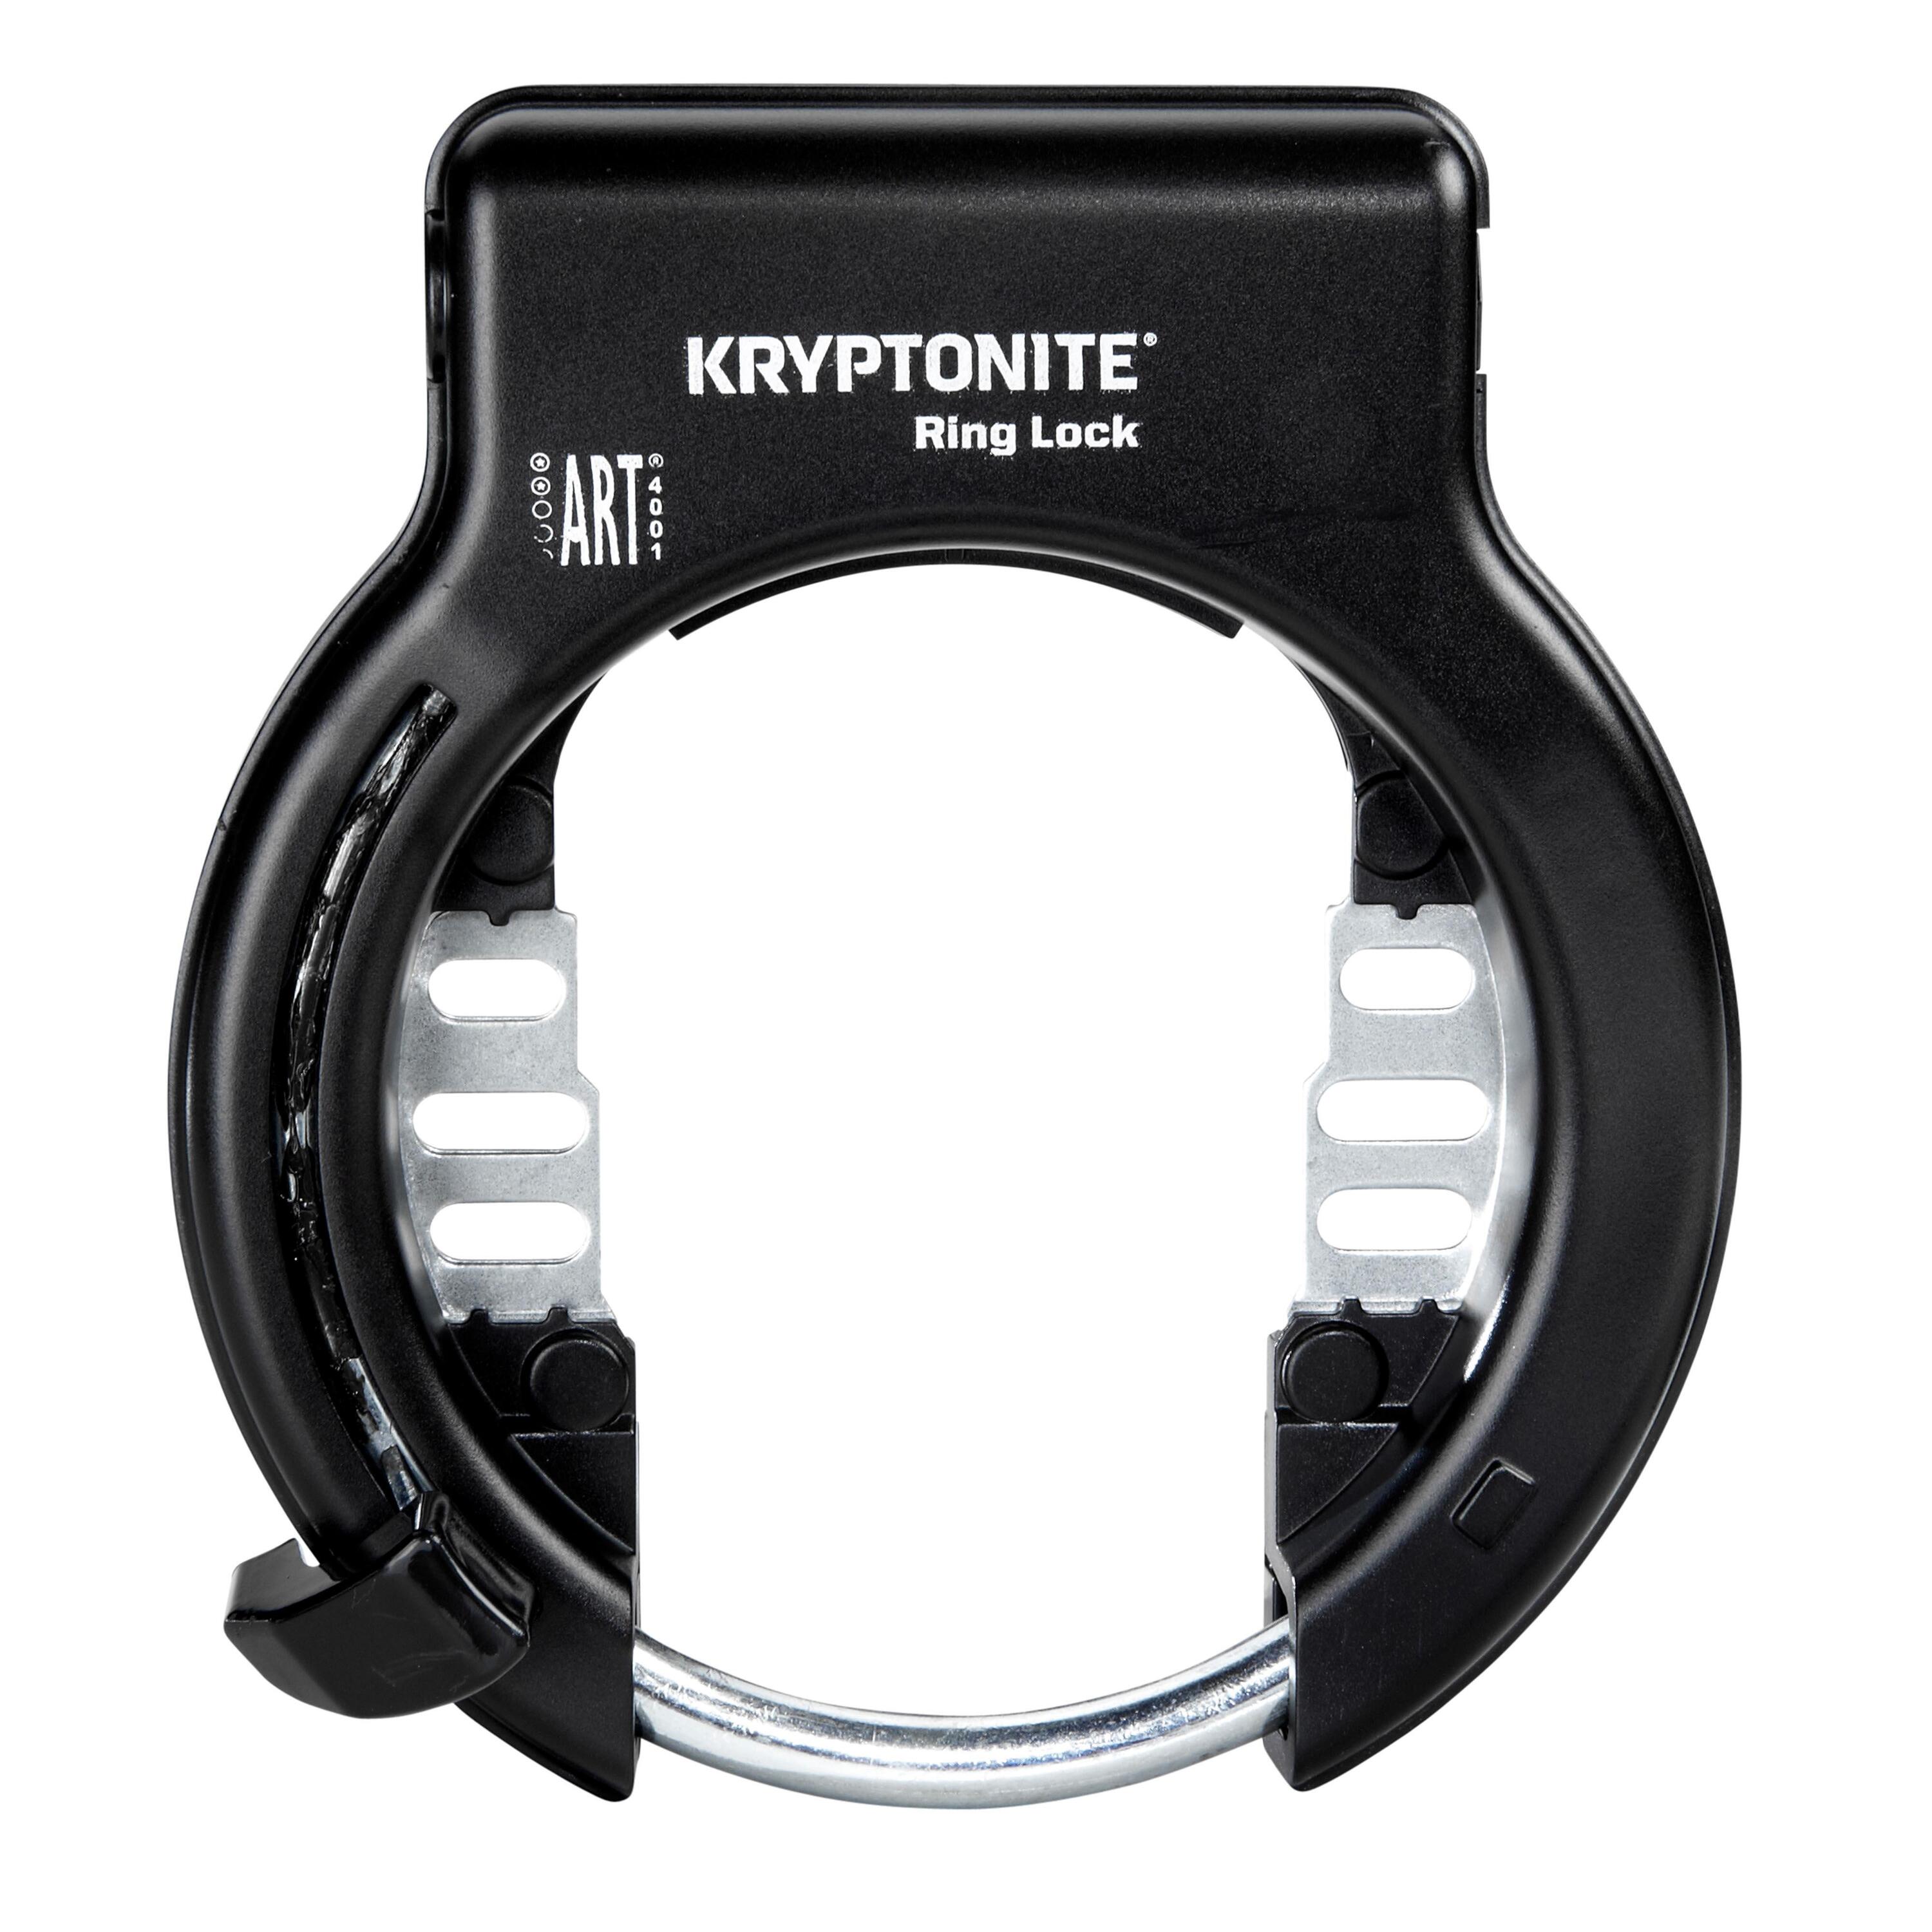 KRYPTONITE Kryptonite Ring Lock with plug in capability - Non Retractable